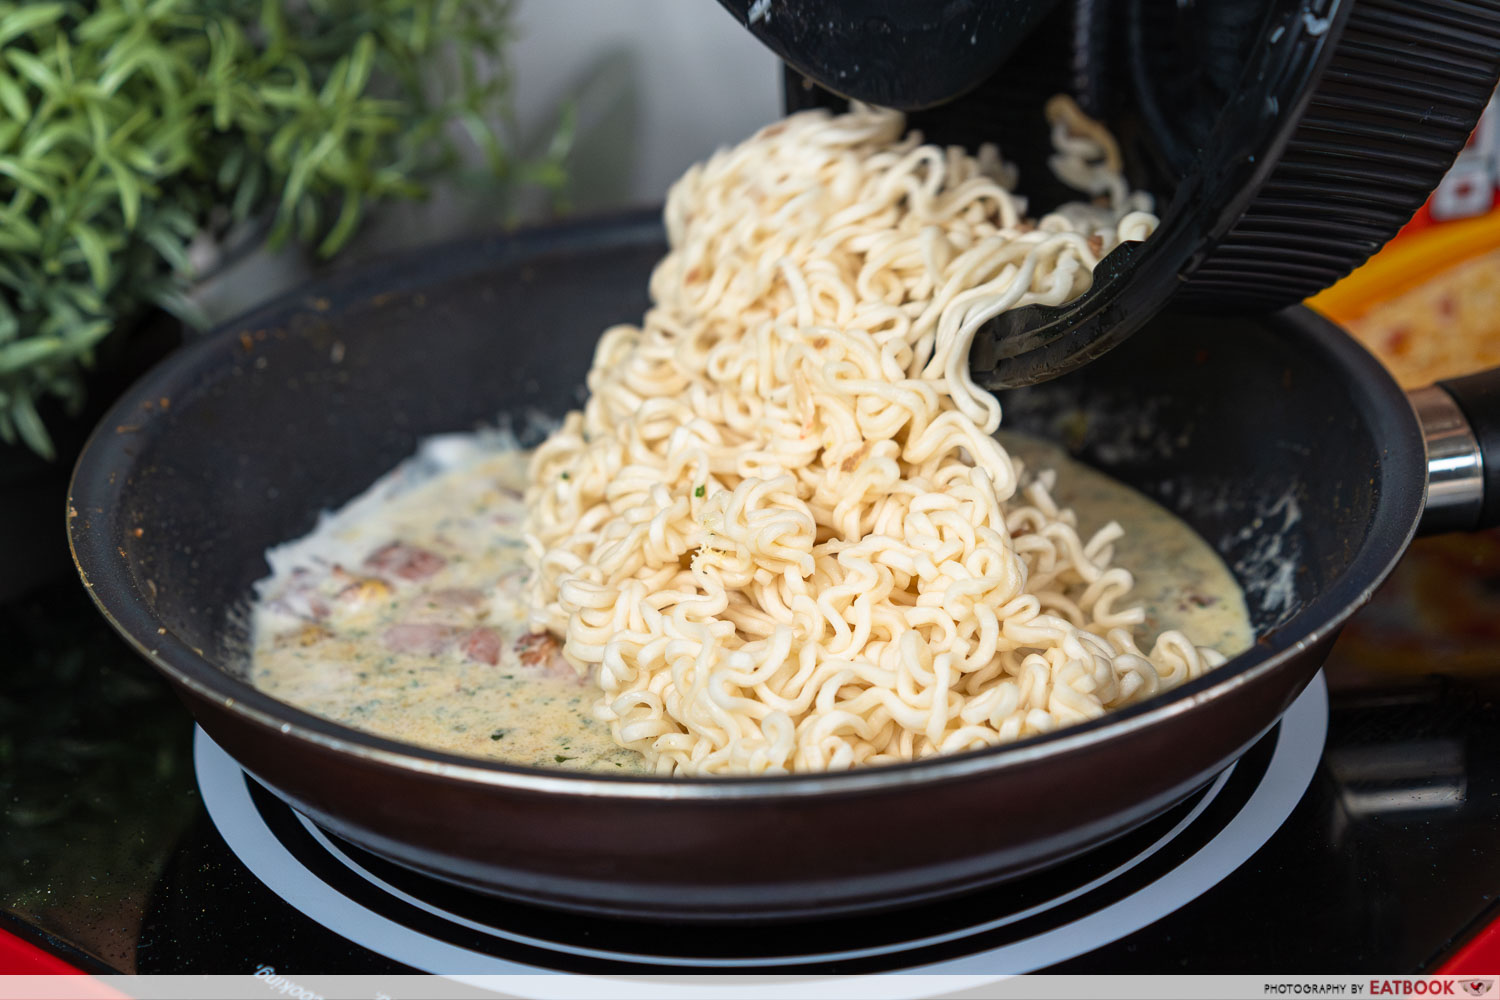 nissin ufo hacks - adding noodles to pan baked truffle carbonara